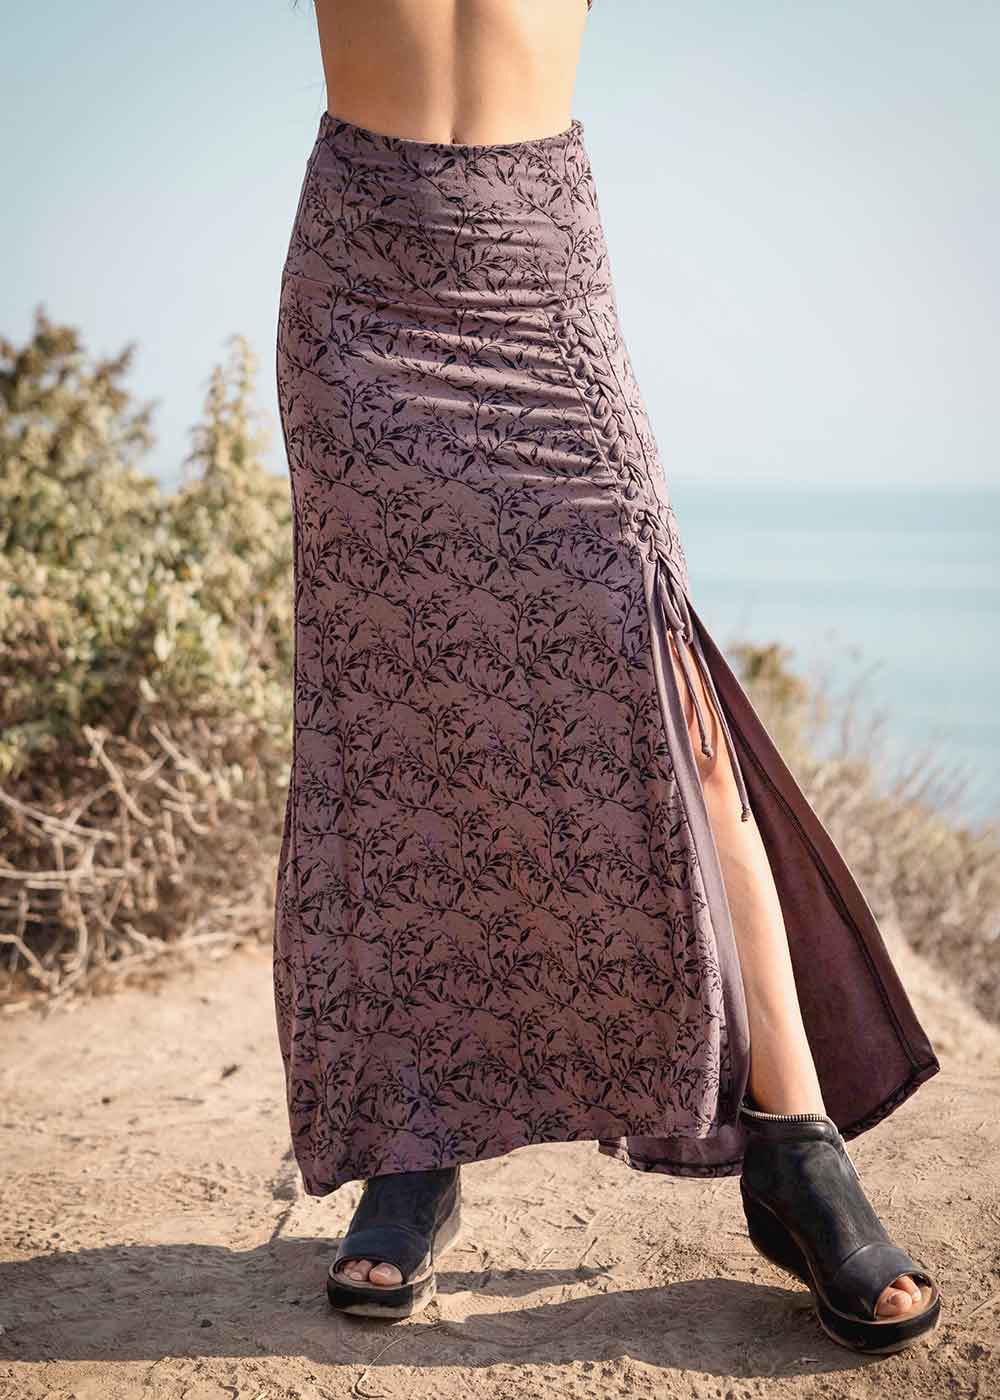 Primavera Maxi Skirt in Hemp by Nomads Hemp Wear